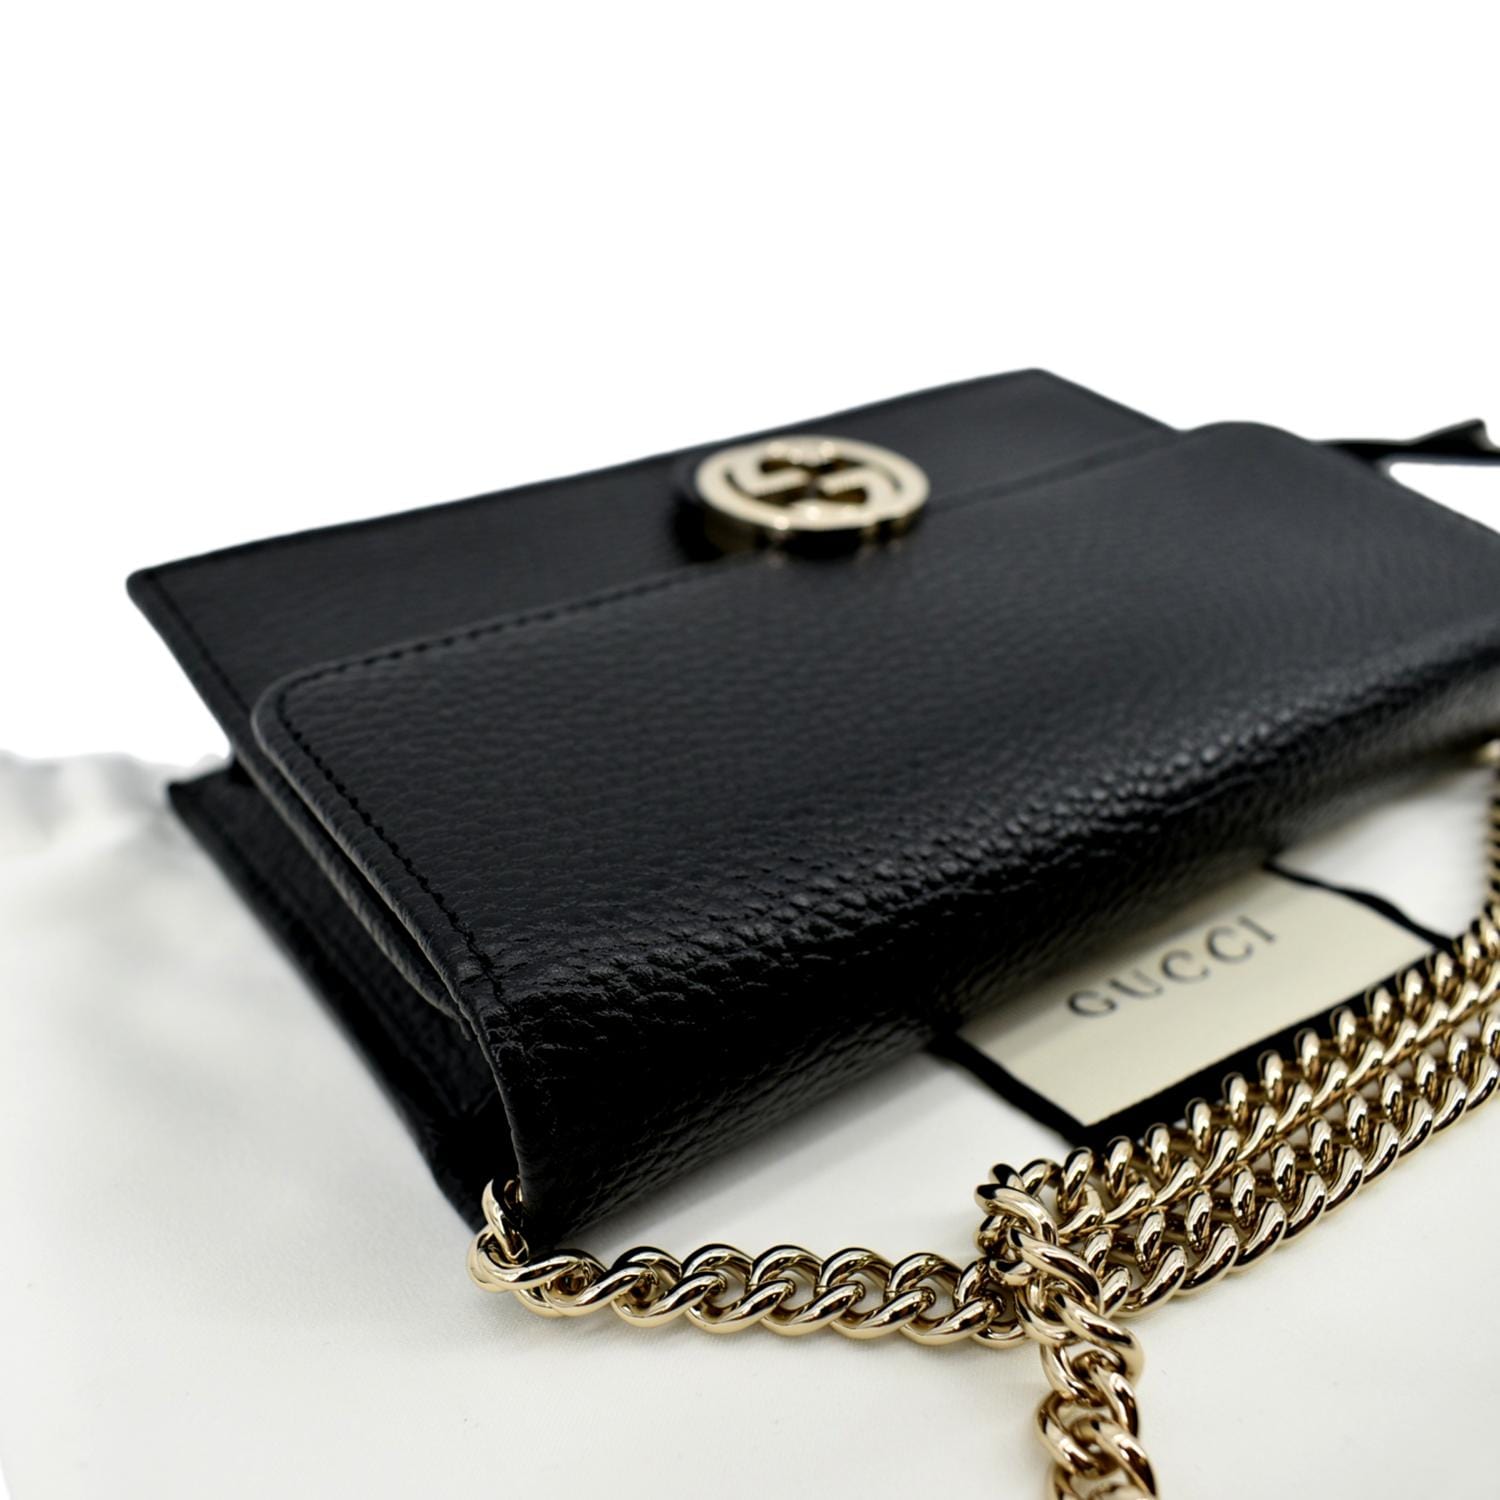 Gucci - GG Interlocking Leather Chain Top Handle Bag Black